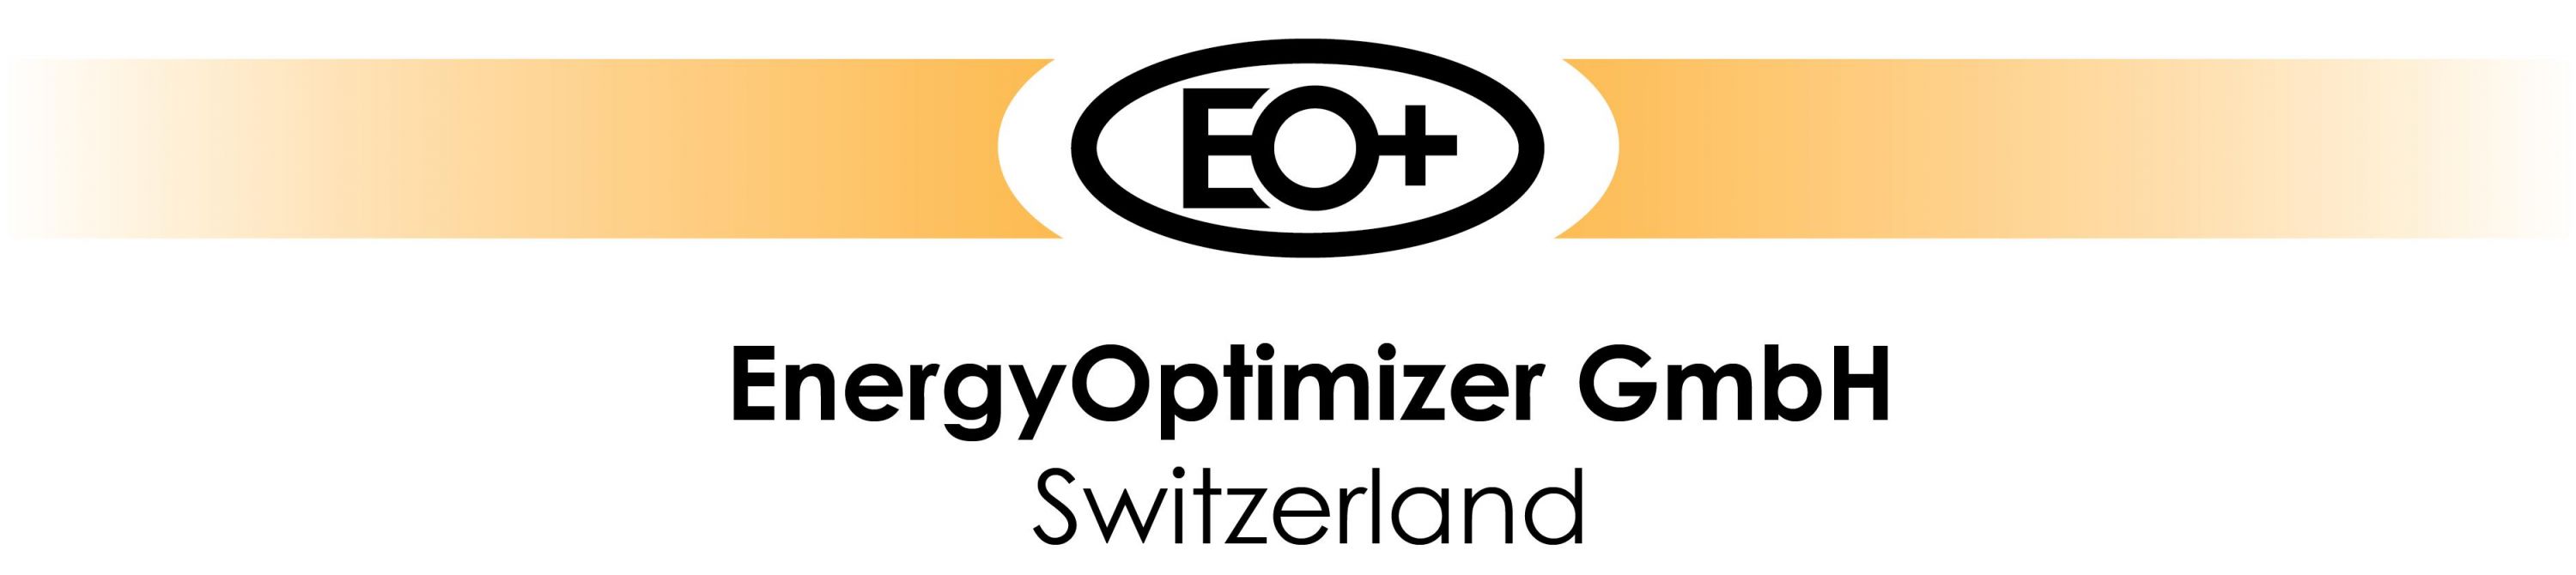 EnergyOptimizer GmbH